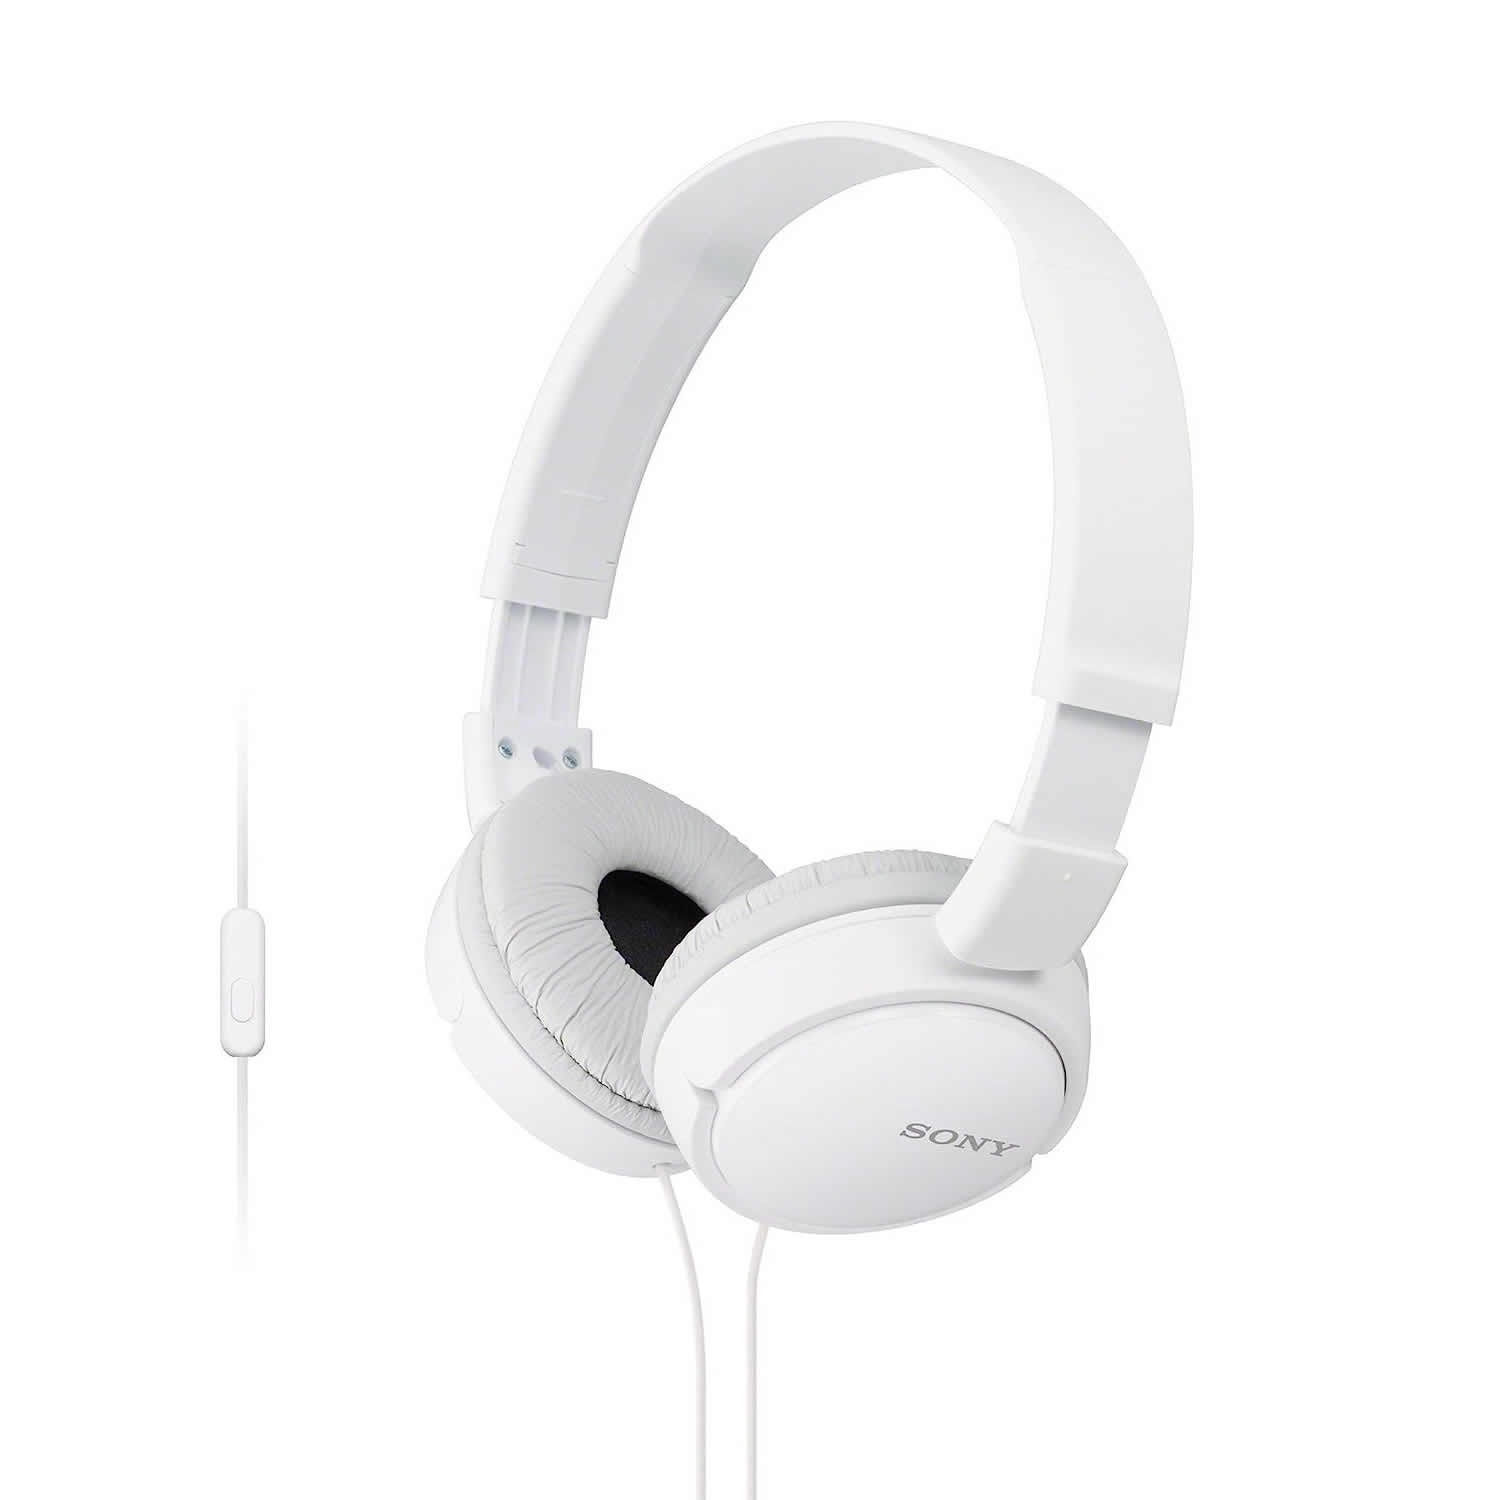 Sony Headband Headphones 30mm Driver 1.2m Cable White